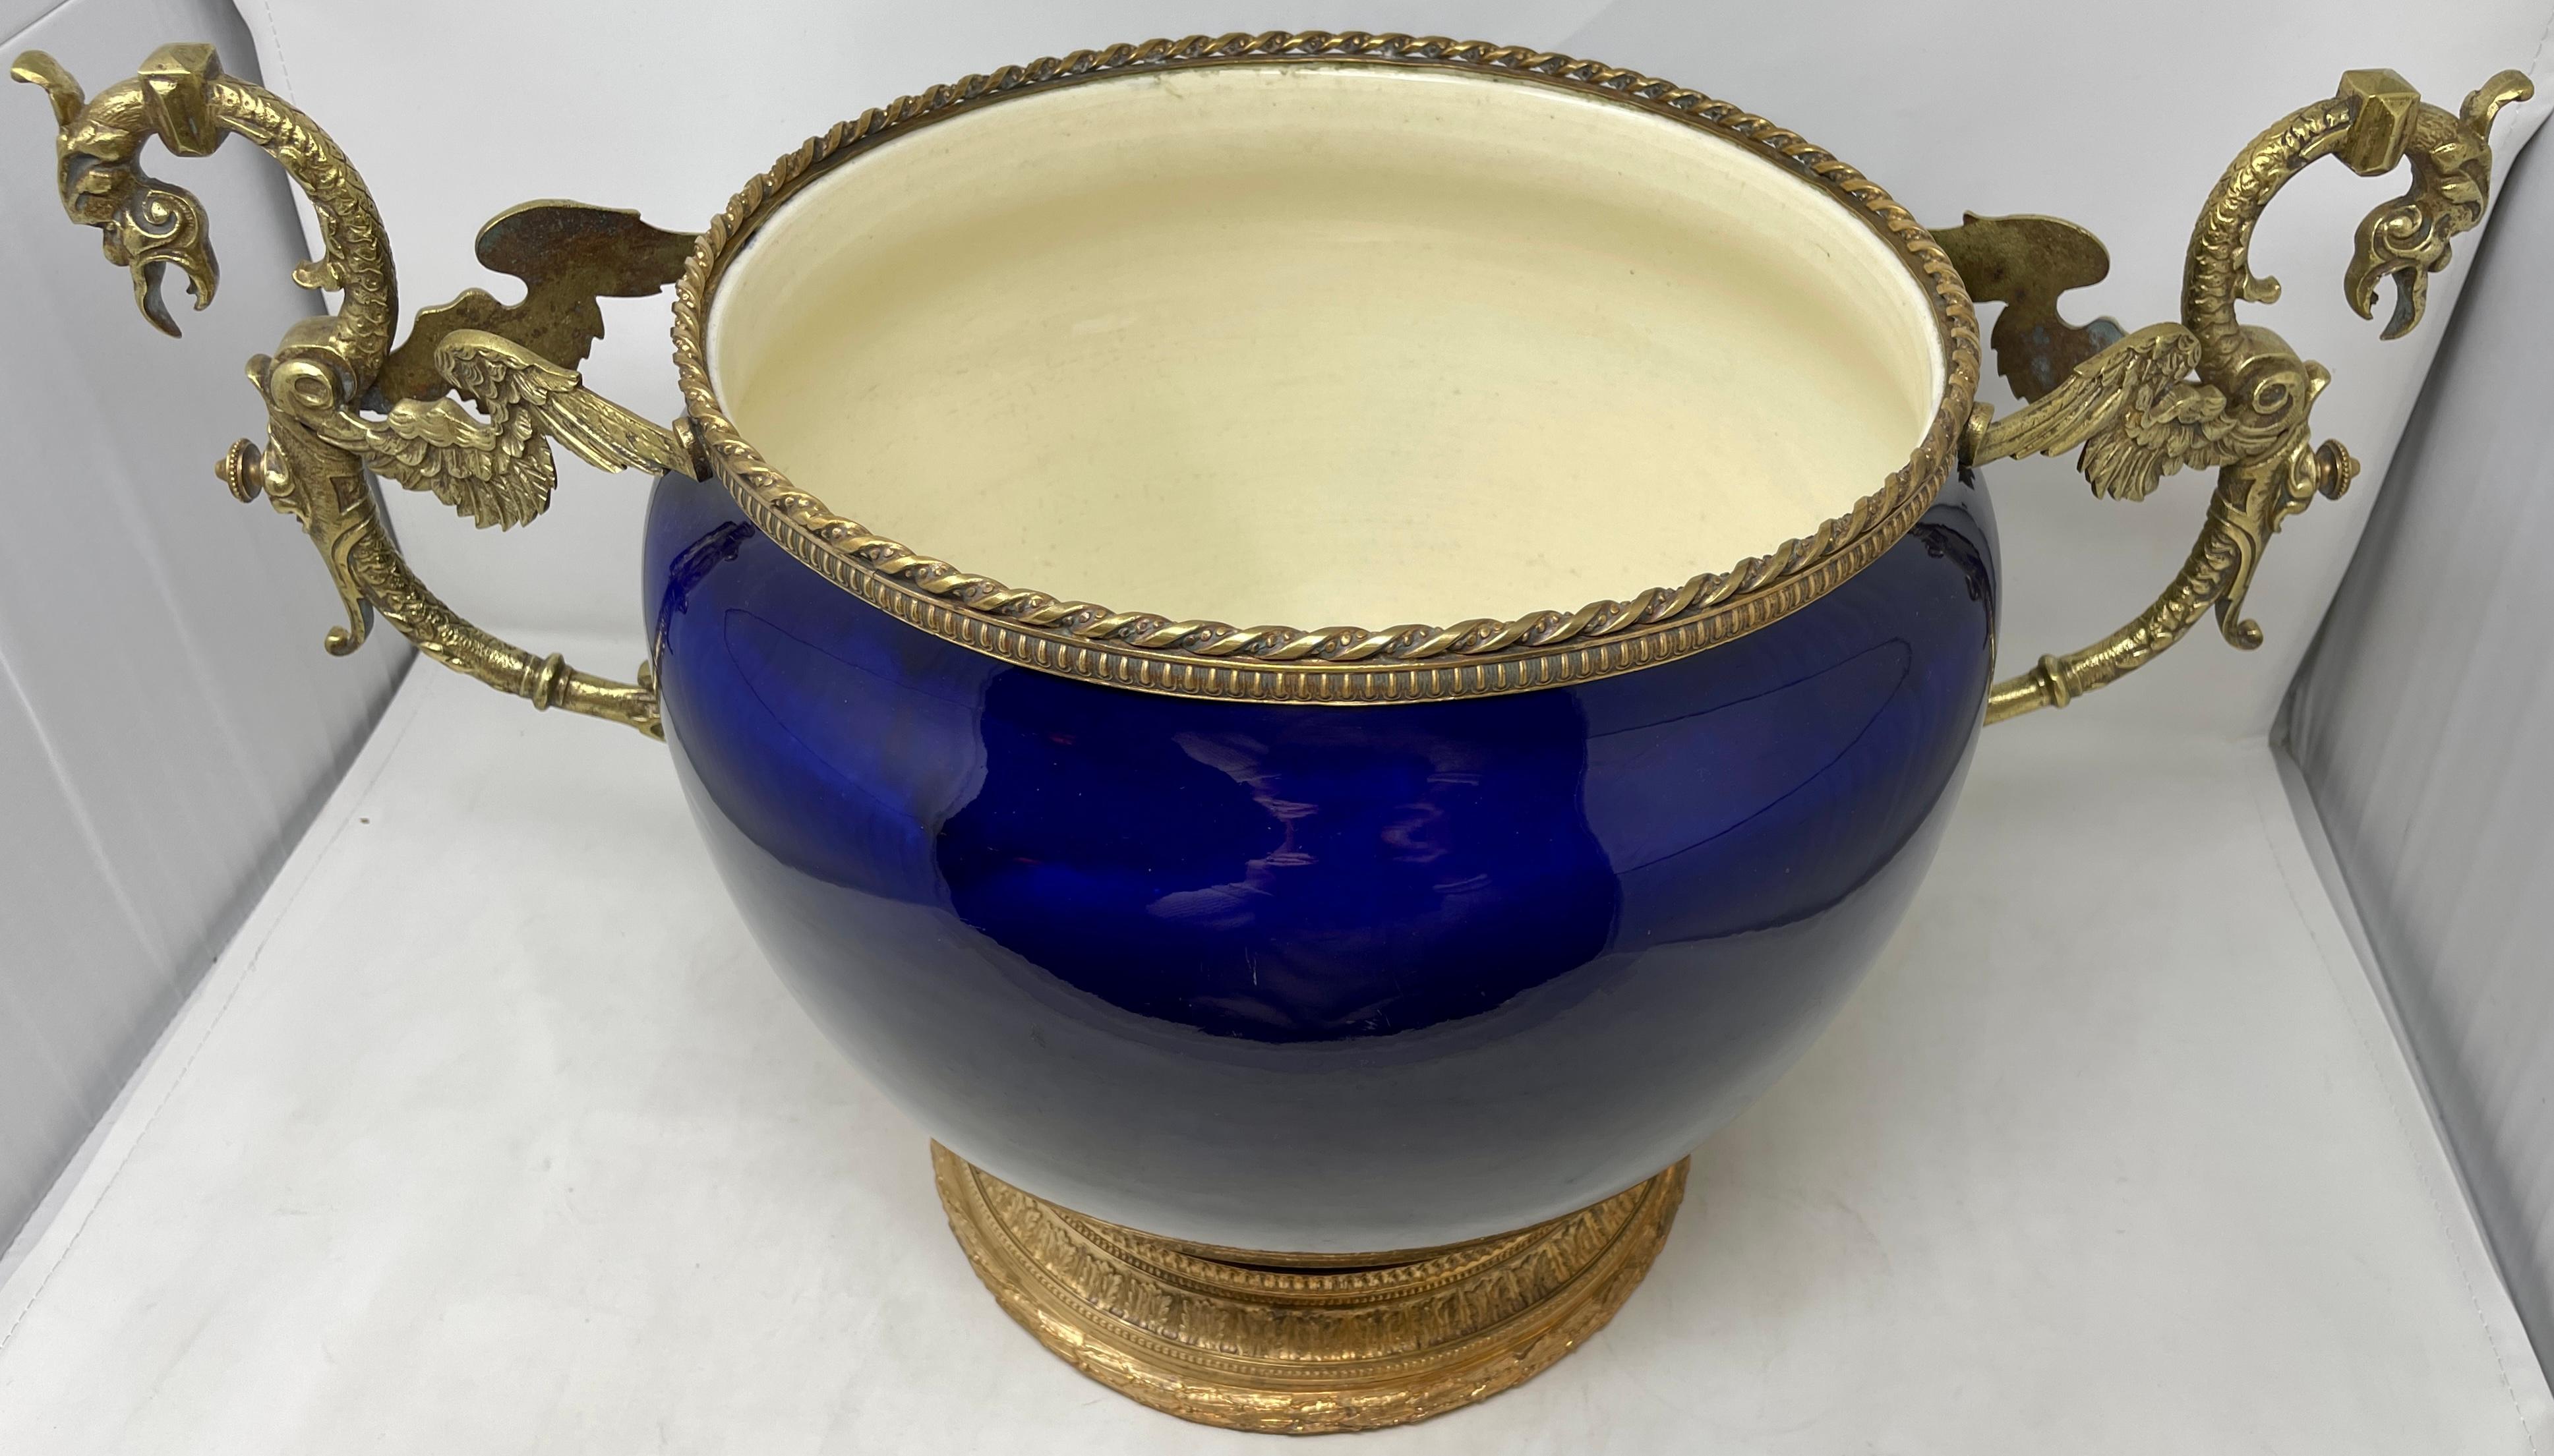 Antique French Cobalt Blue Porcelain Jardiniere with Gold Bronze Mounts, Circa 1890's.